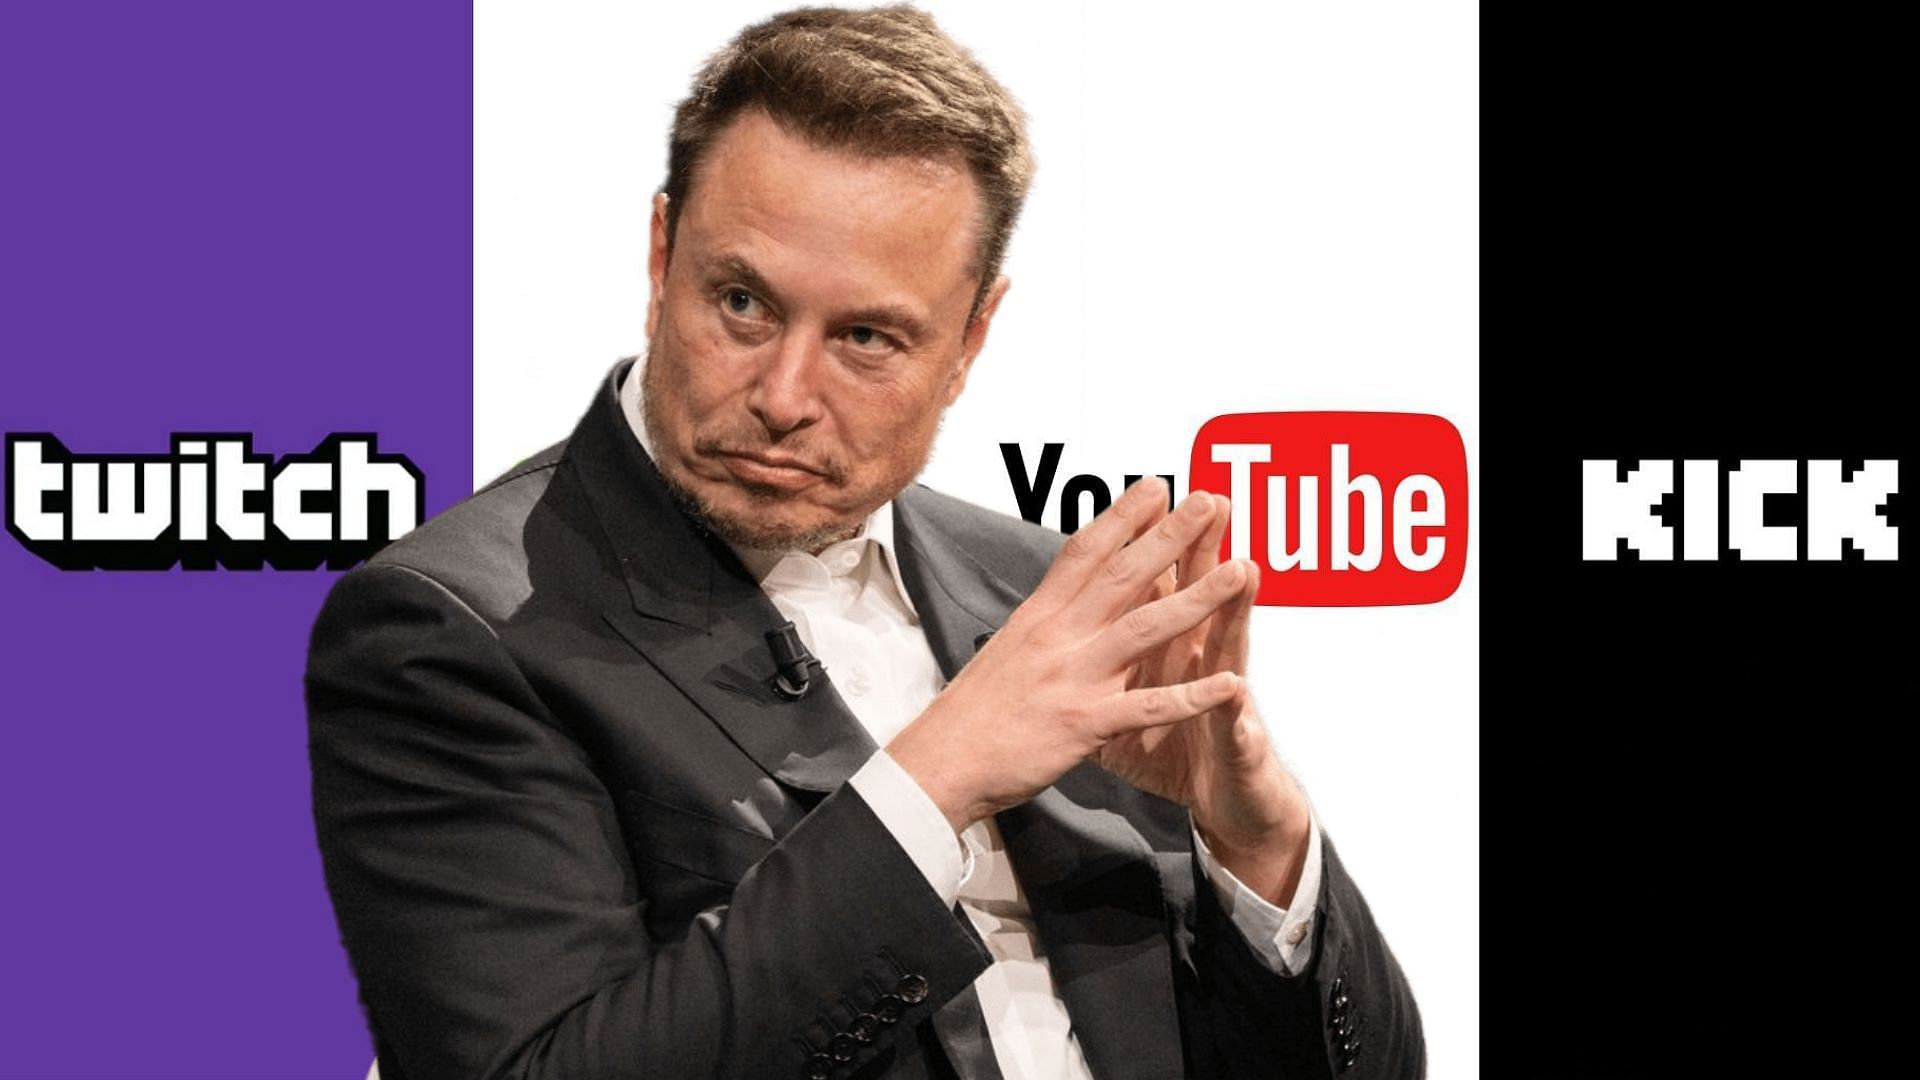 Elon Musk looking to take on Twitch, YouTube and Kick with livestreaming on X (Image via Twitch.tv, YouTube.com, Kick.com, Elon Musk/X)